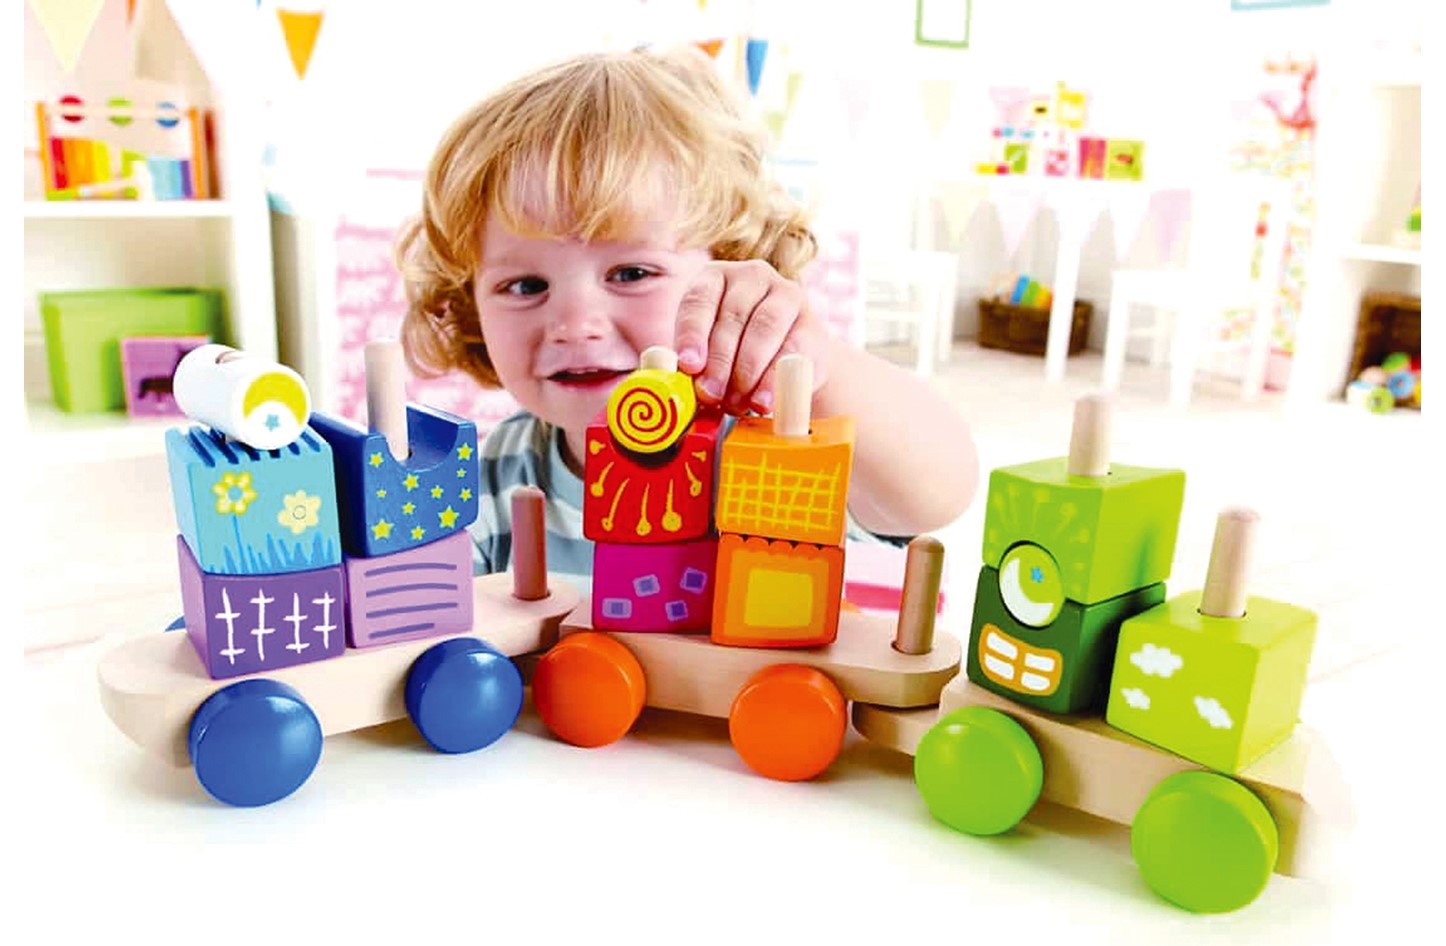 Toys picture. Детские игрушки. Игрушки для малышей. Полезные игрушки для детей.